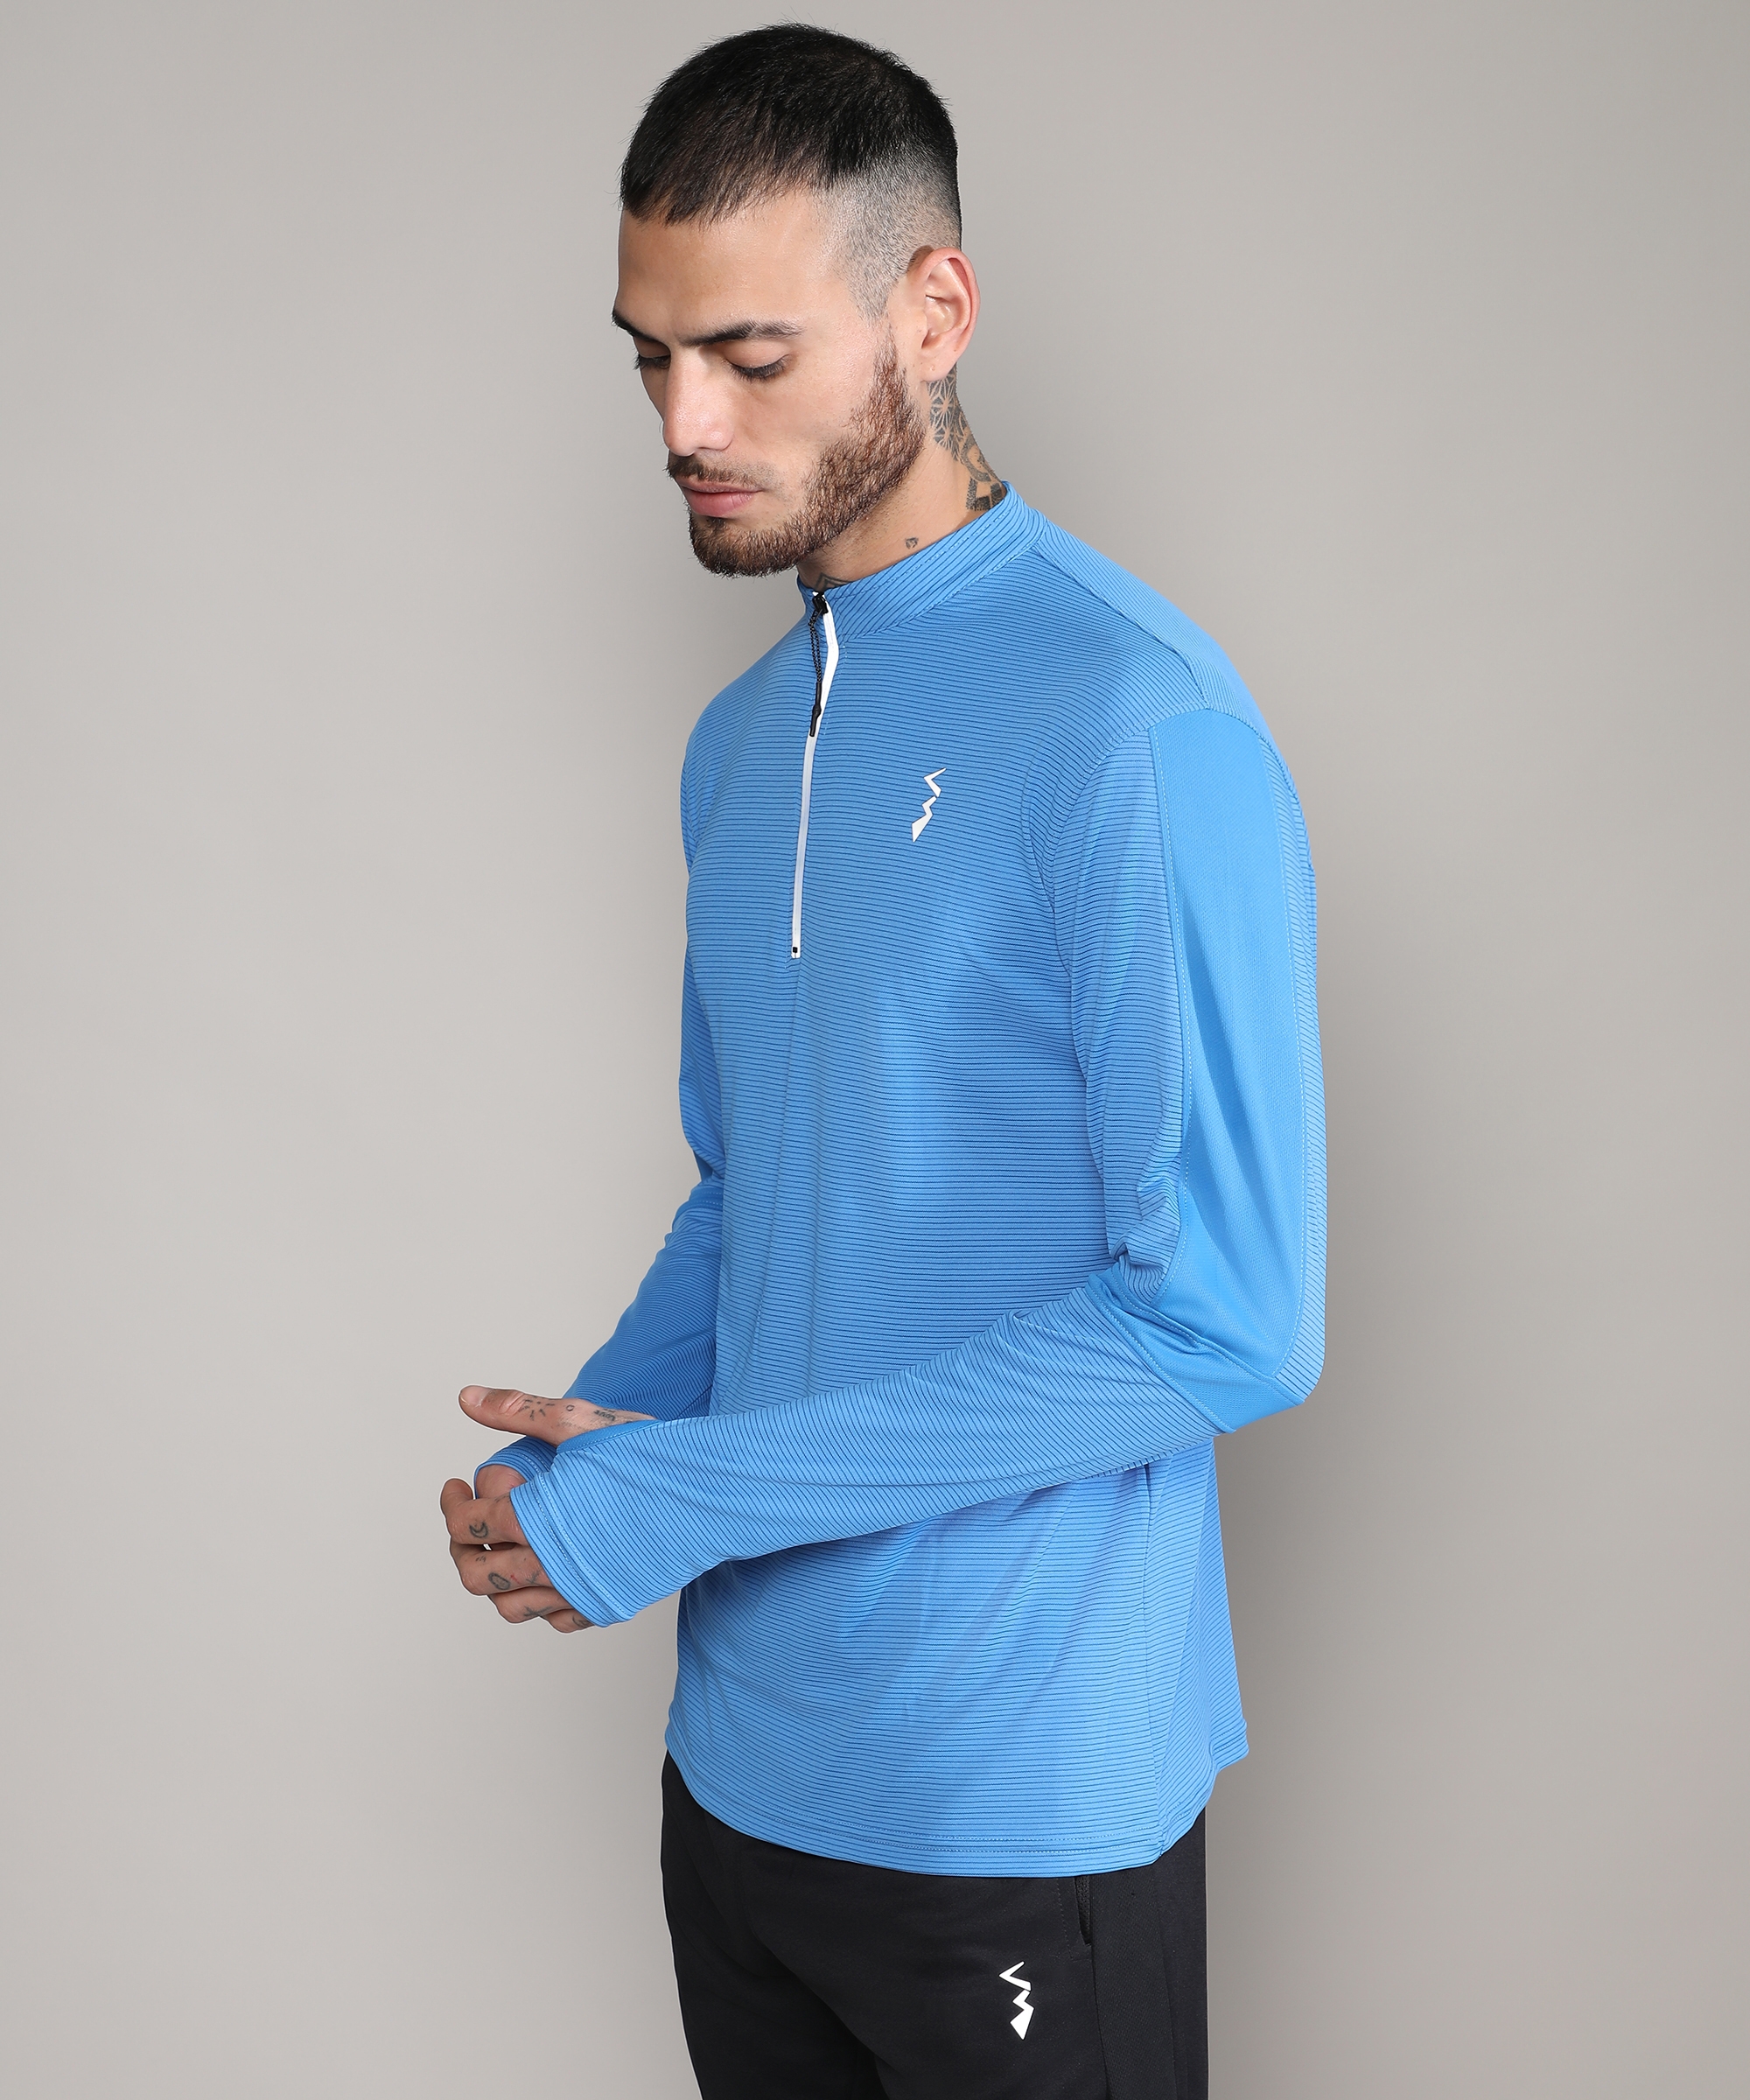 CAMPUS SUTRA | Men's Light Blue Solid Activewear T-Shirt